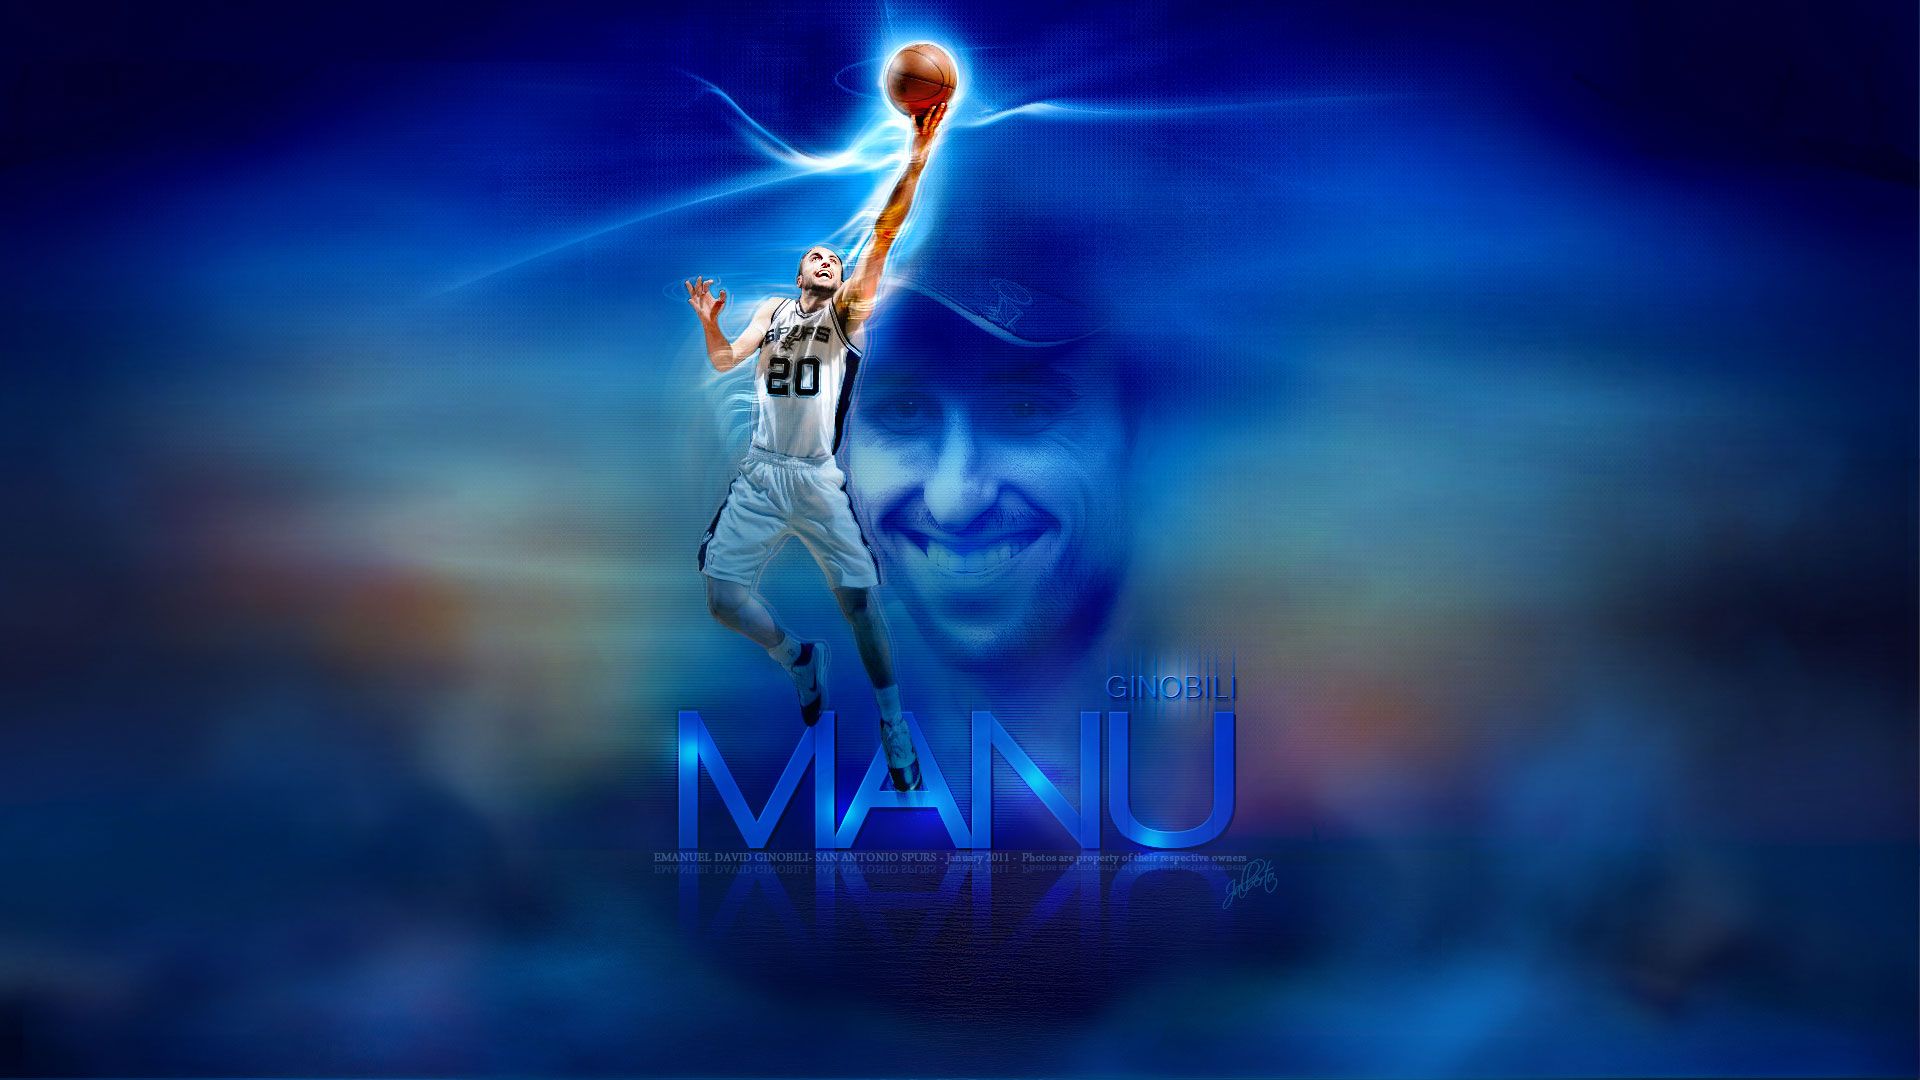 Manu Ginobili Spurs Layup Widescreen Wallpaper | Basketball ...